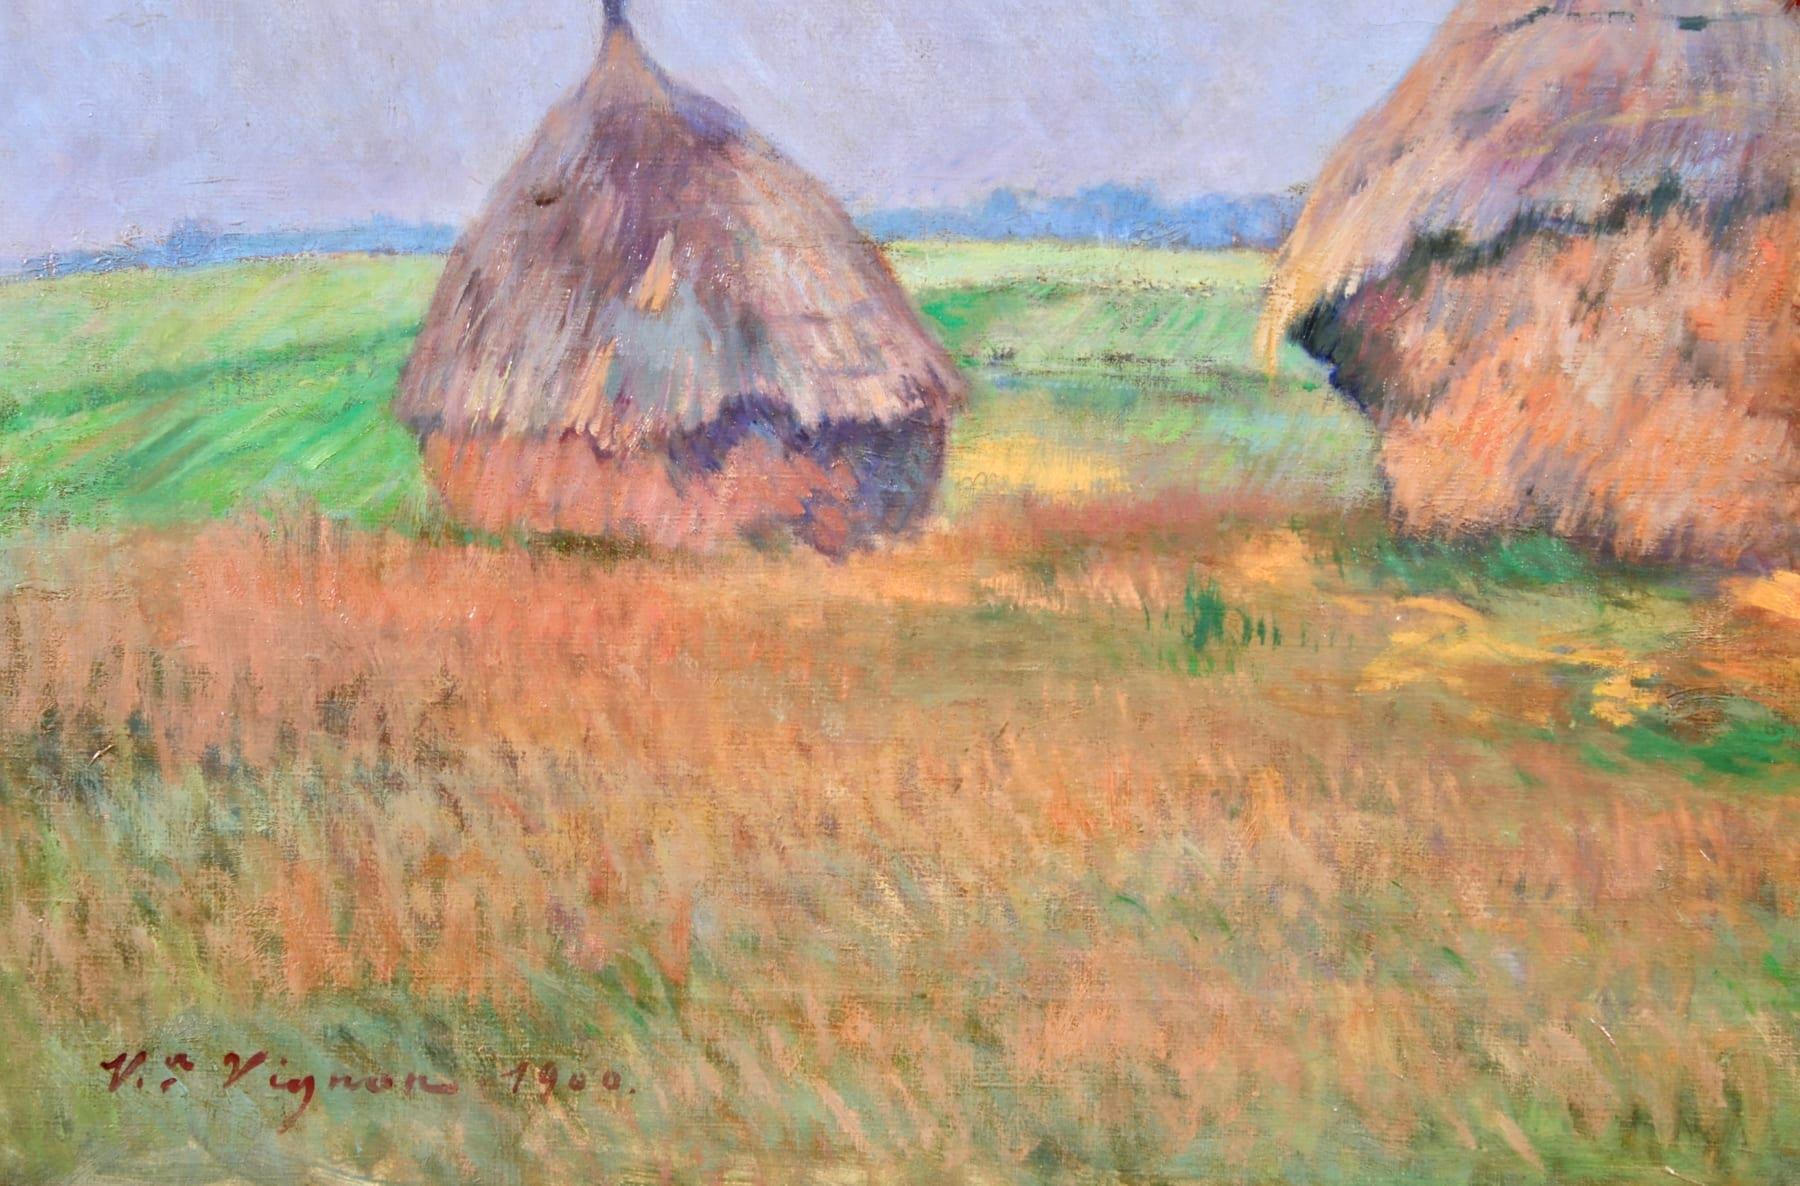 Les Meules - Impressionist Oil, Haystacks in Summer Landscape by Victor Vignon 1